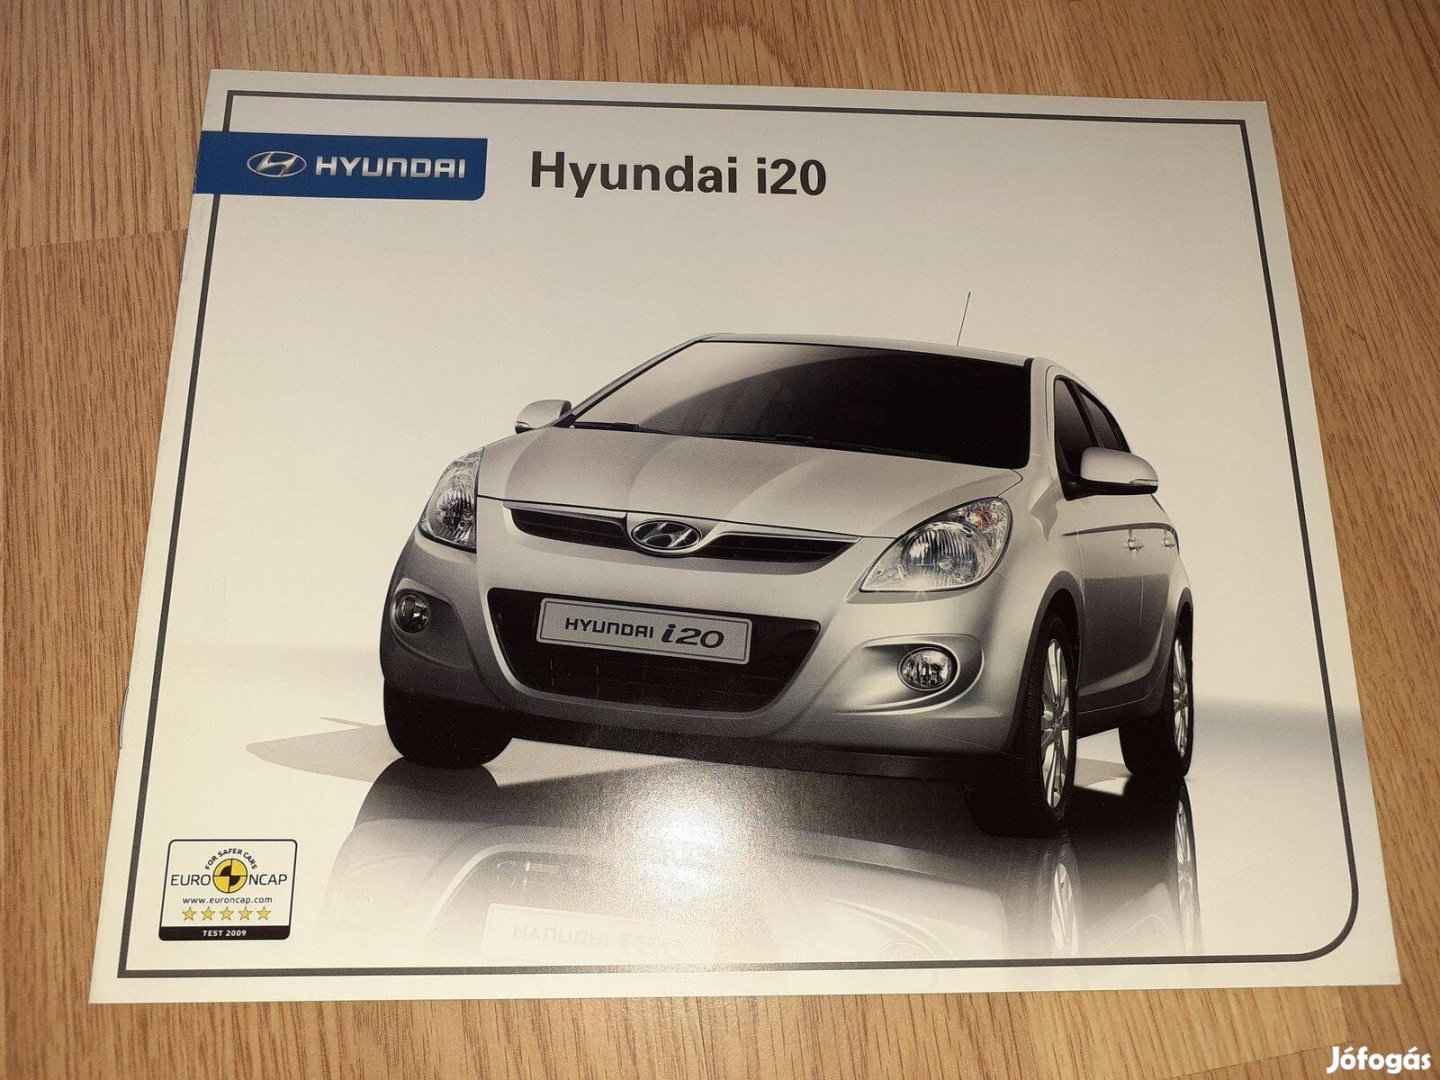 Hyundai i20 prospektus - 2010, magyar nyelvű